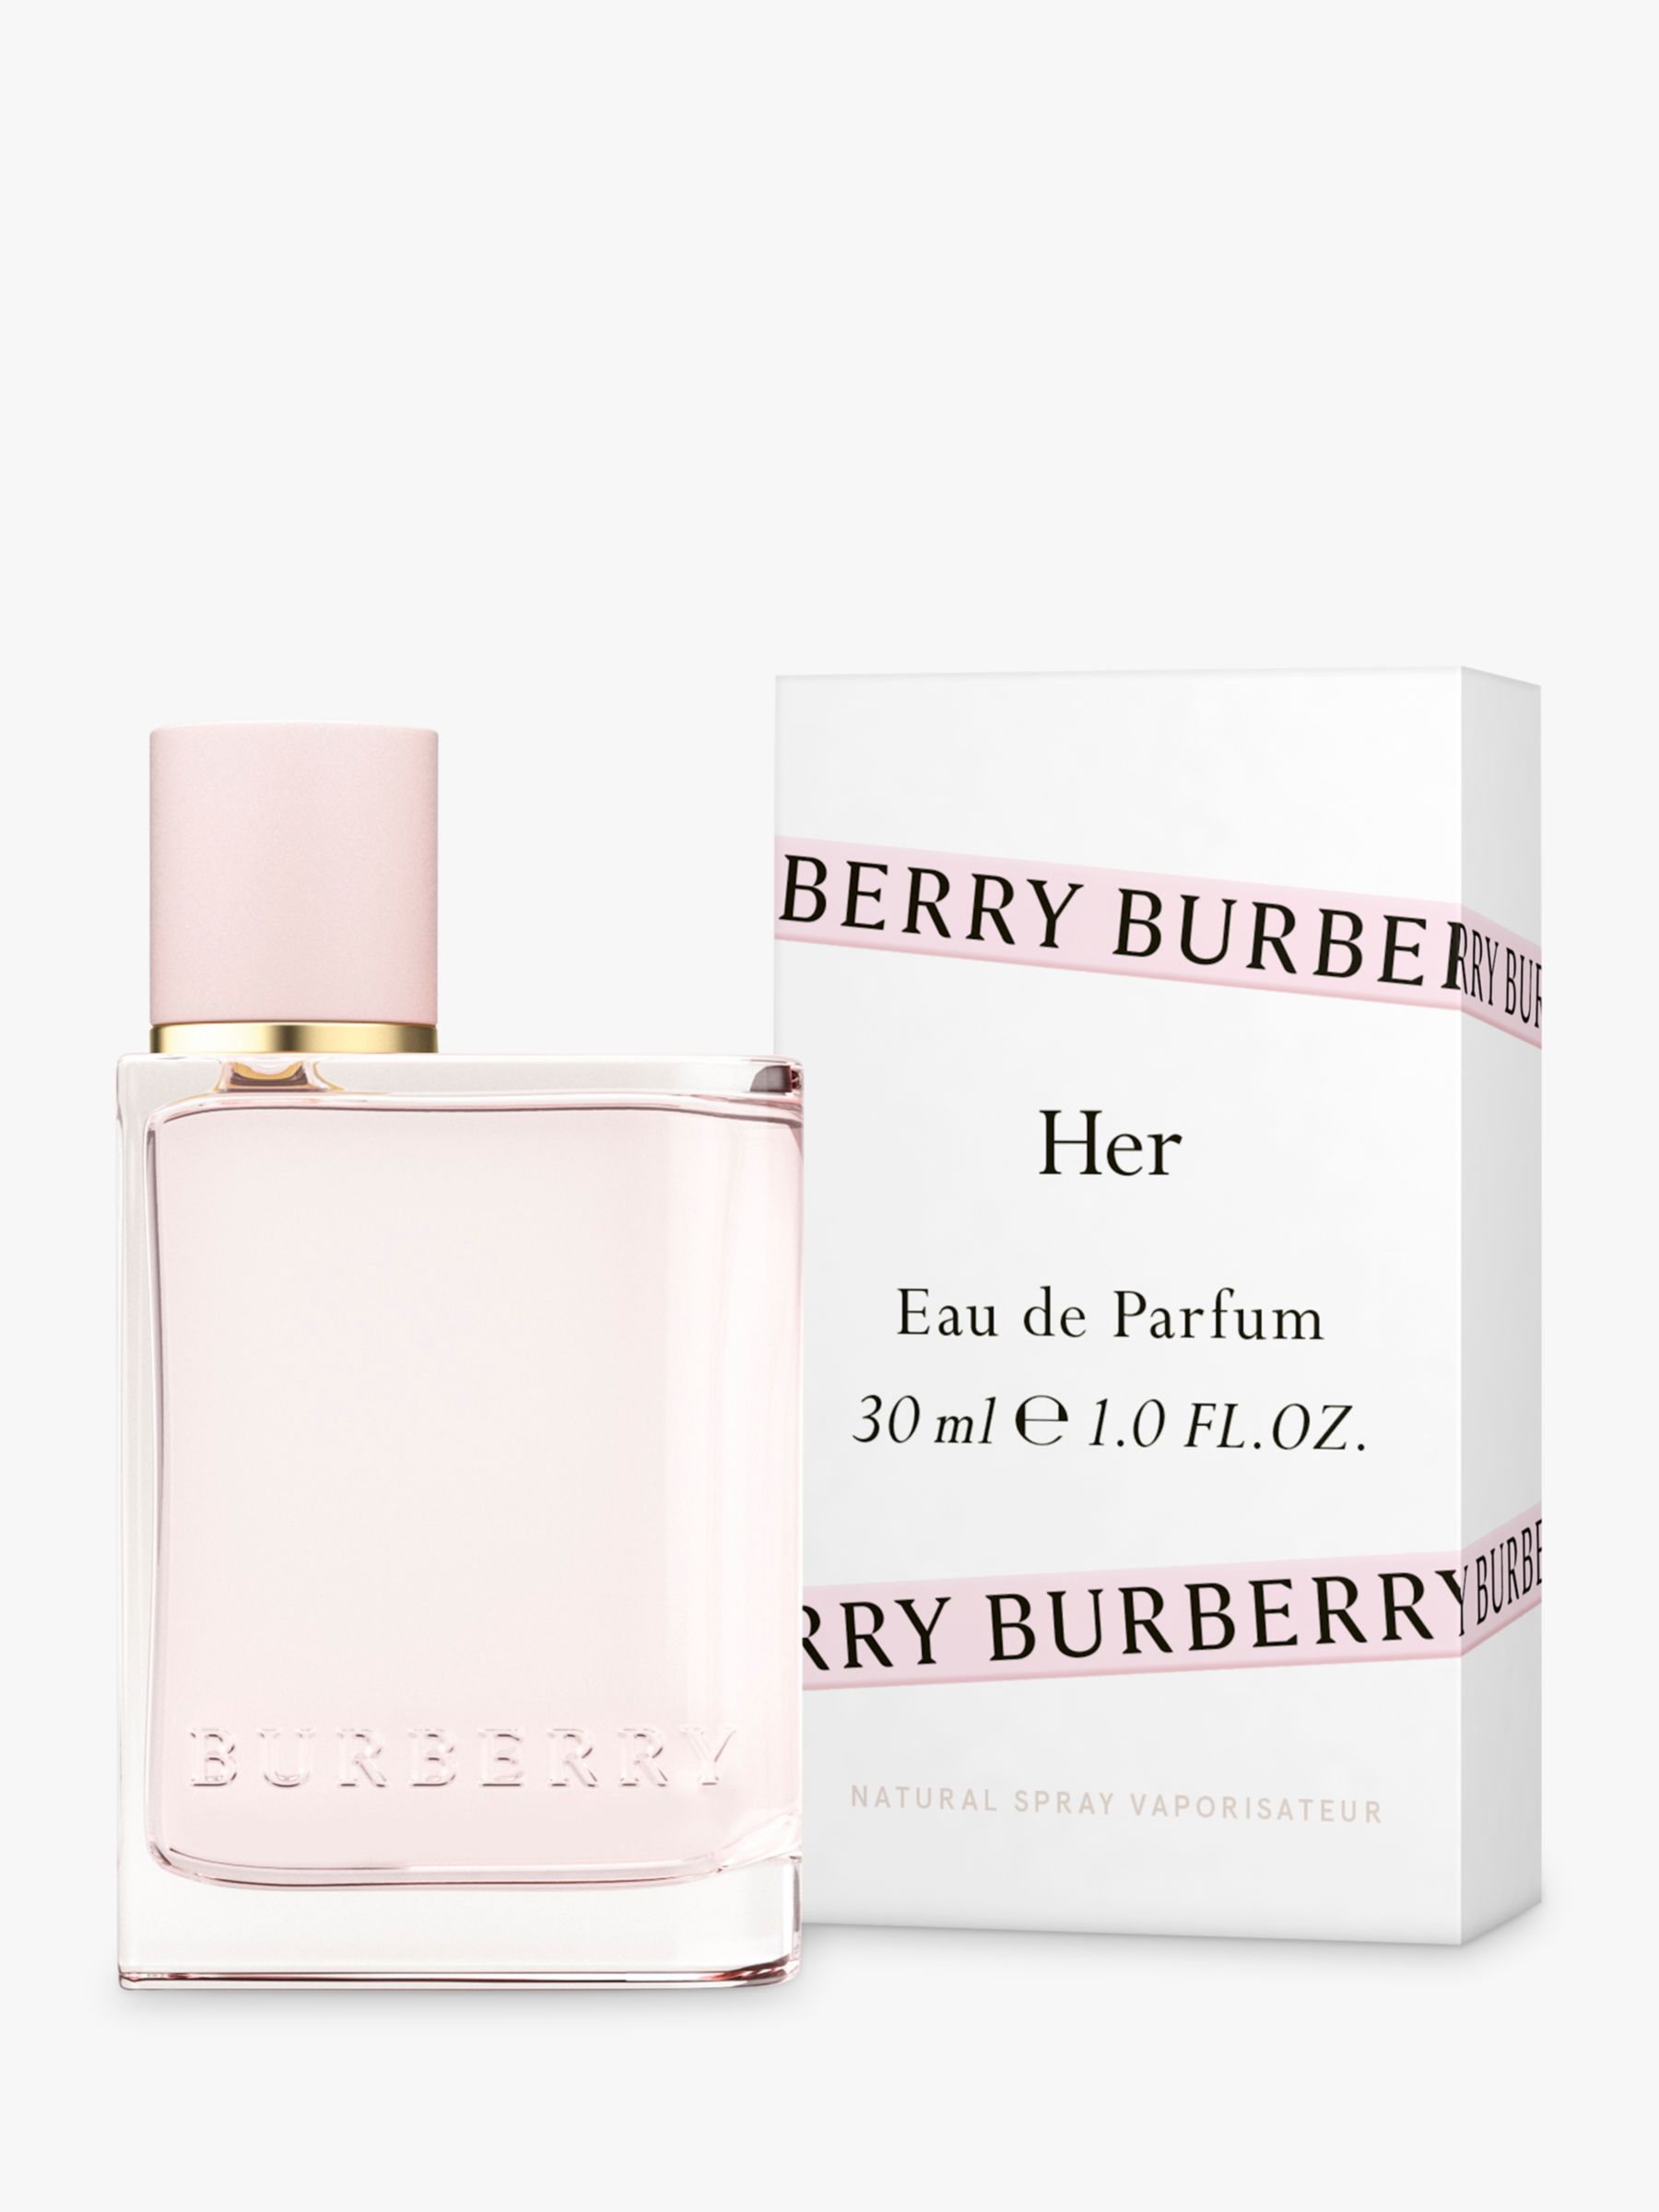 burberry new scent